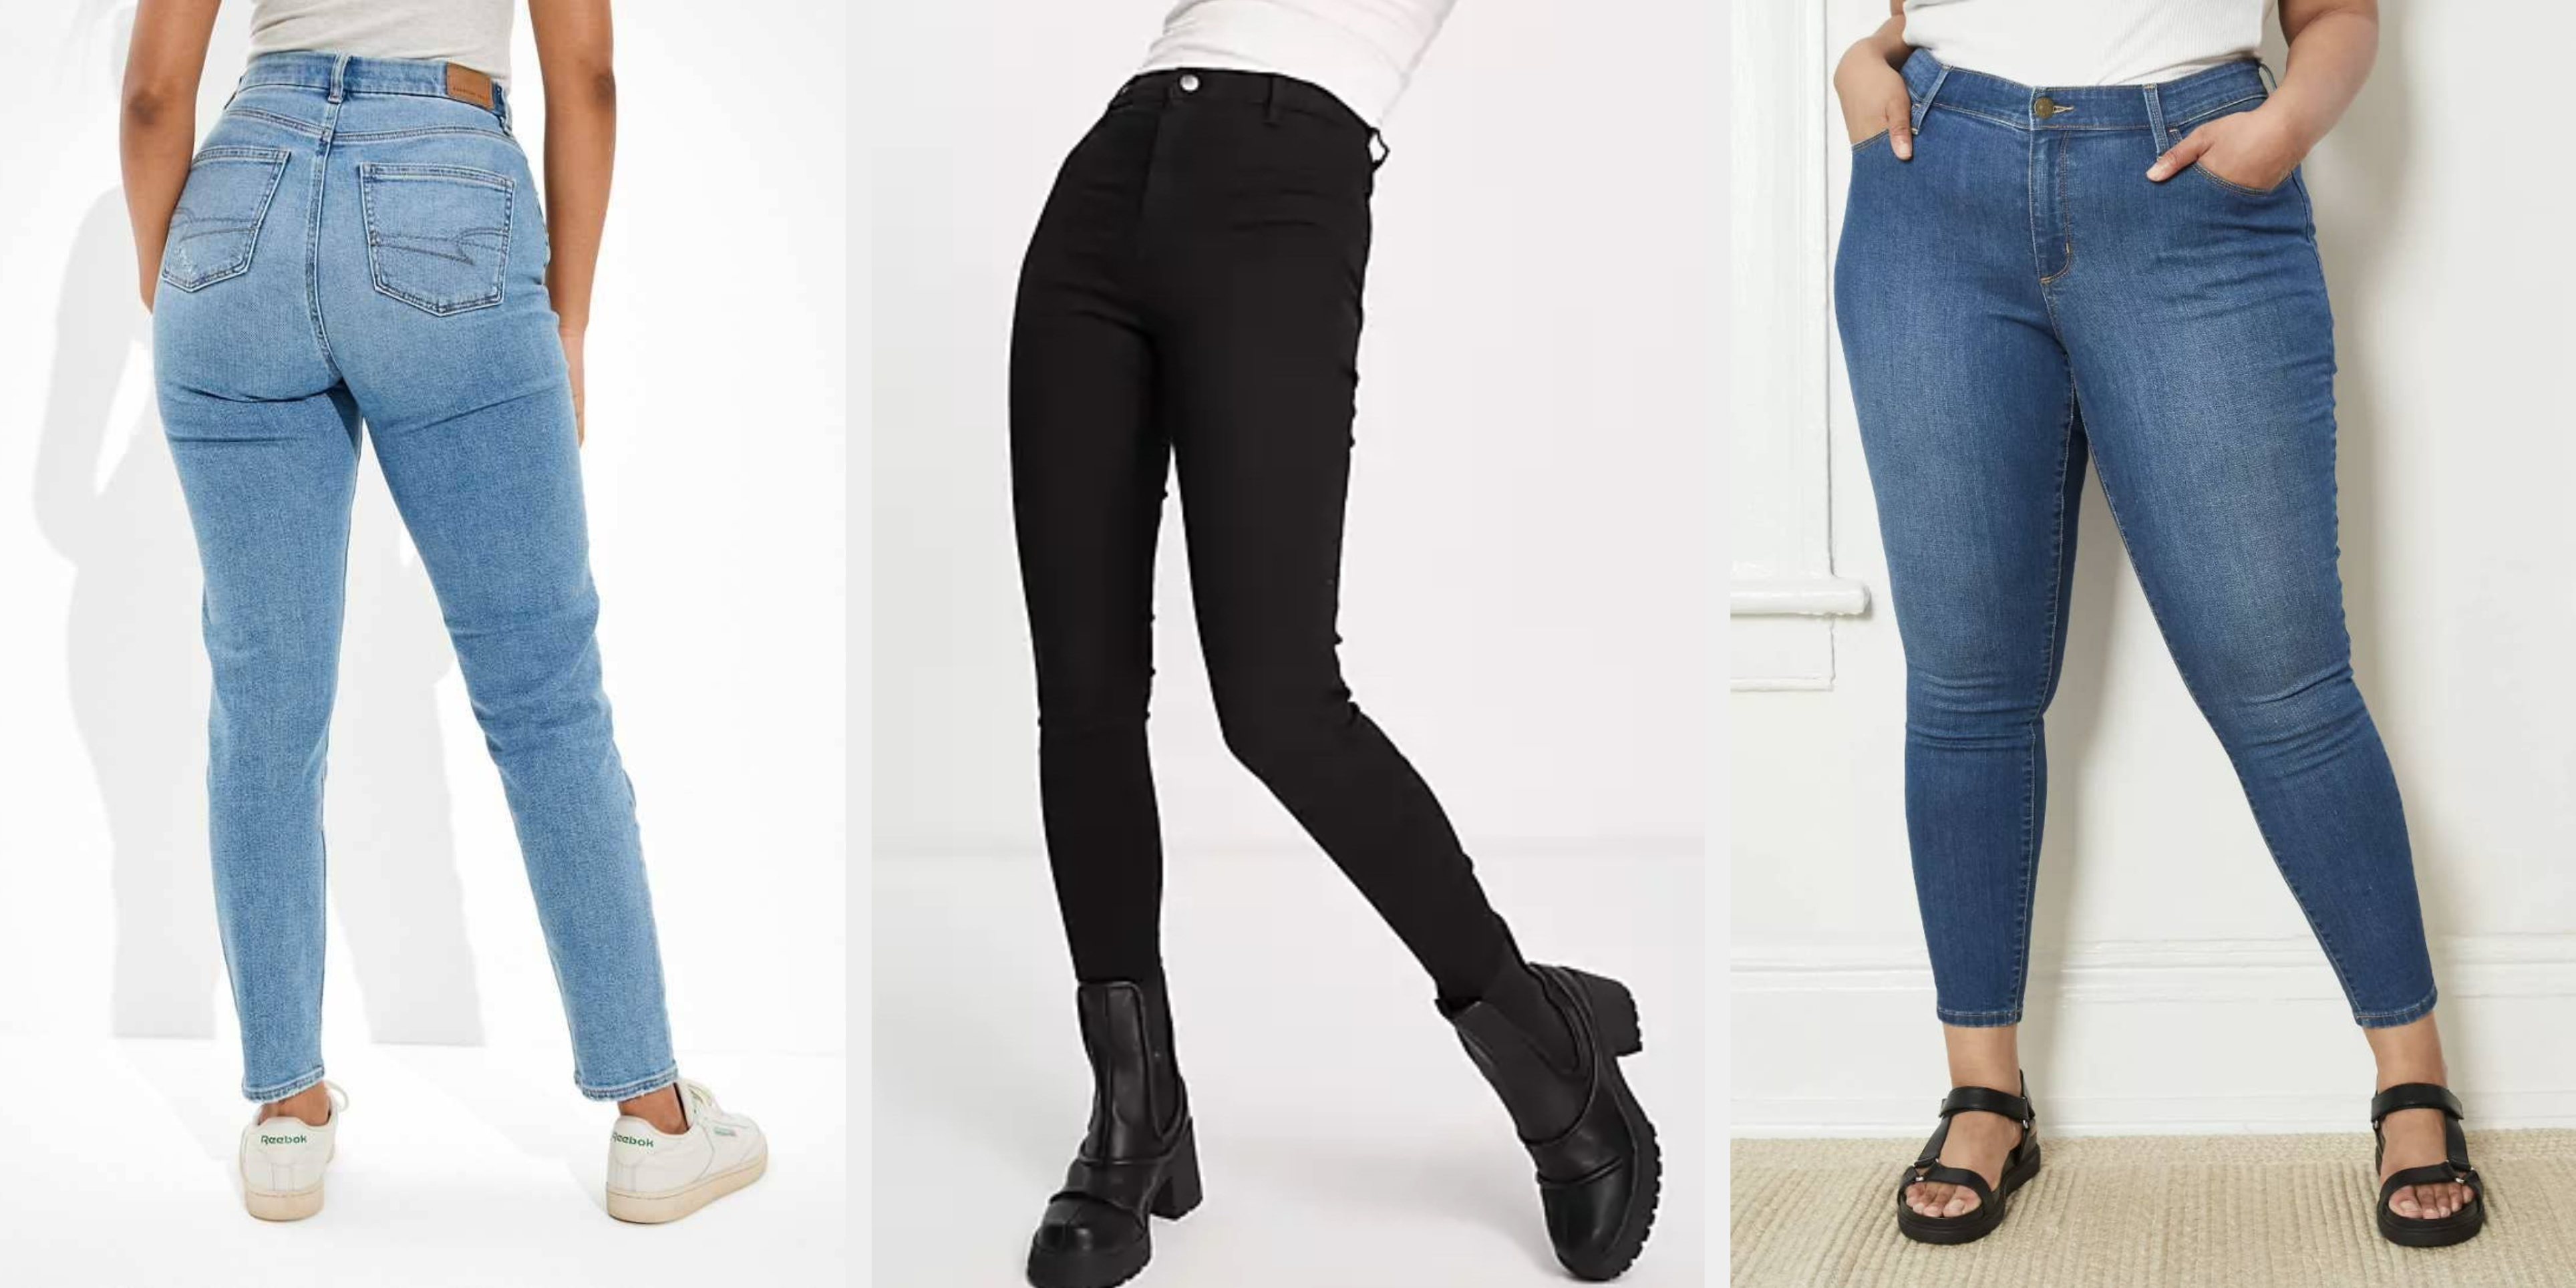 Girls Jeggings Premium Quality Denim Stretchy Comfort Jeans for Kids Girls